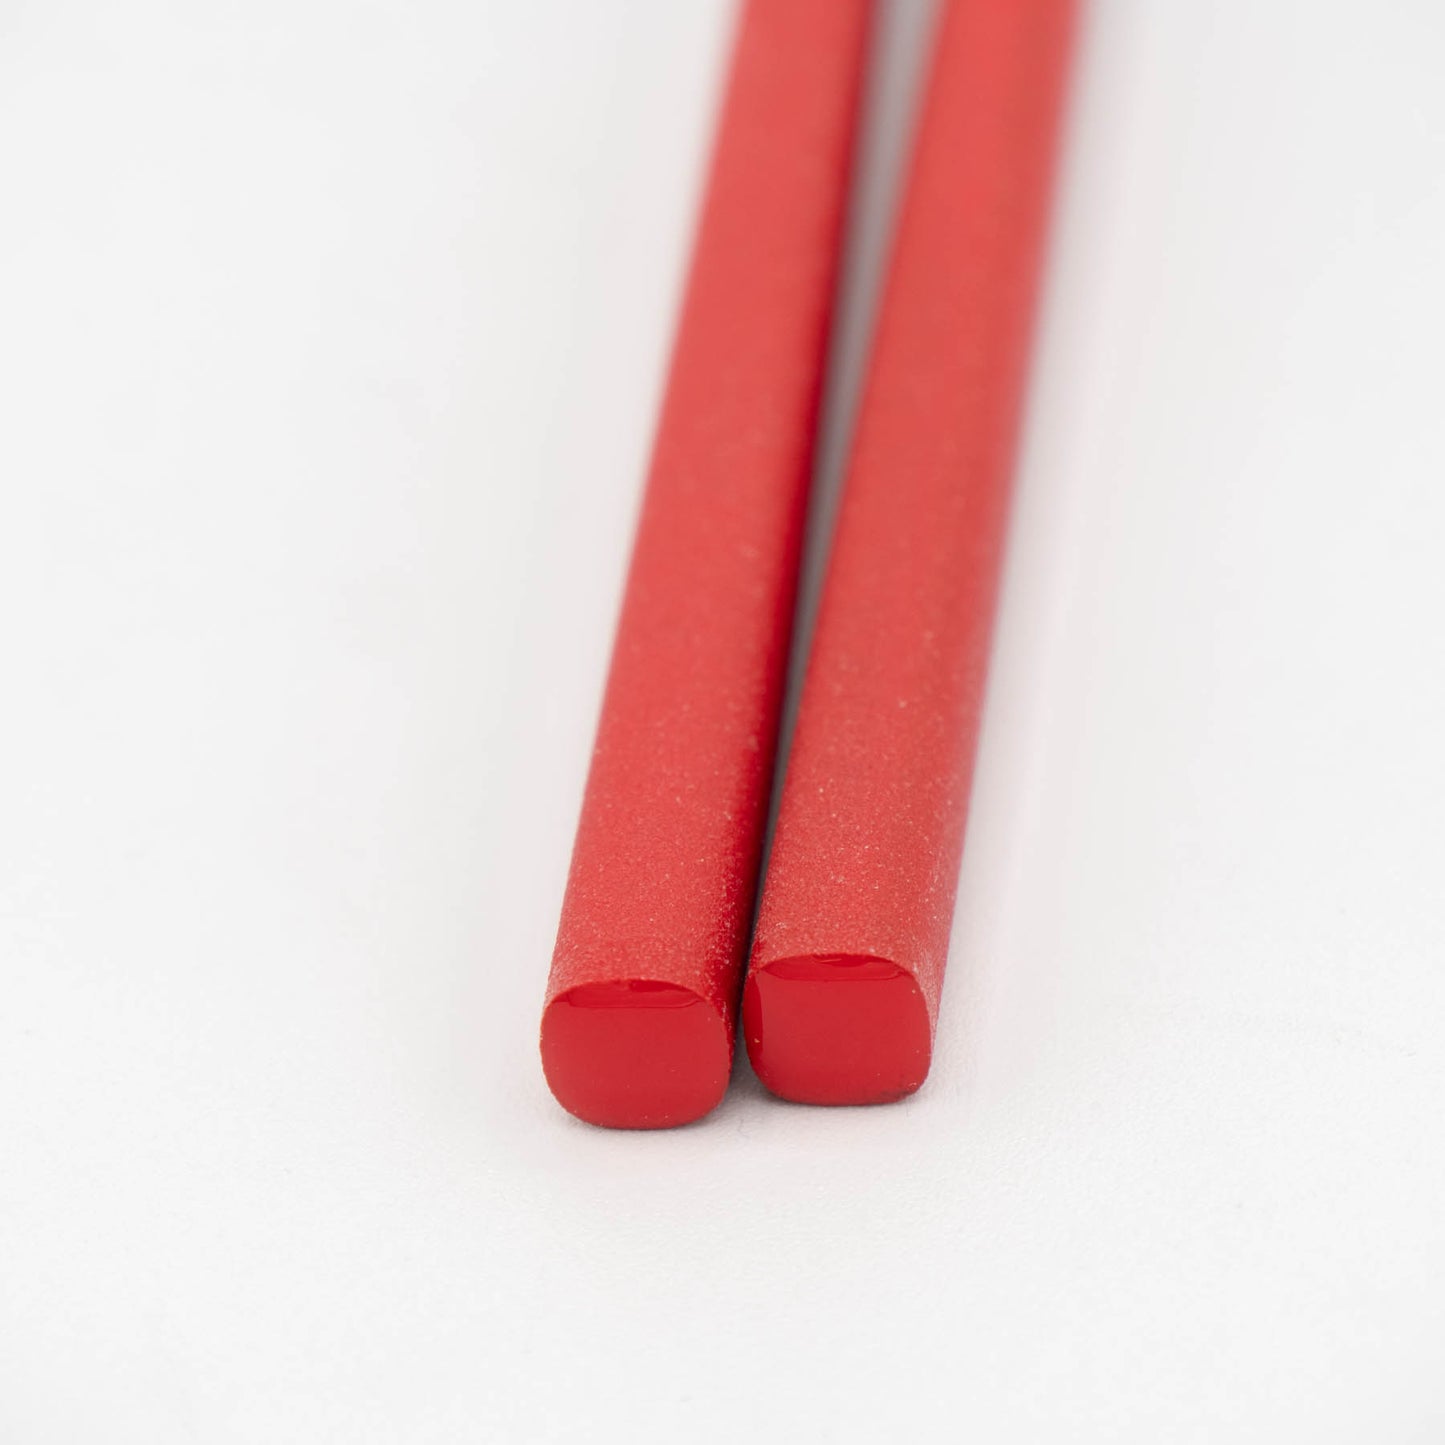 Kanshitsu - Chopsticks - Red